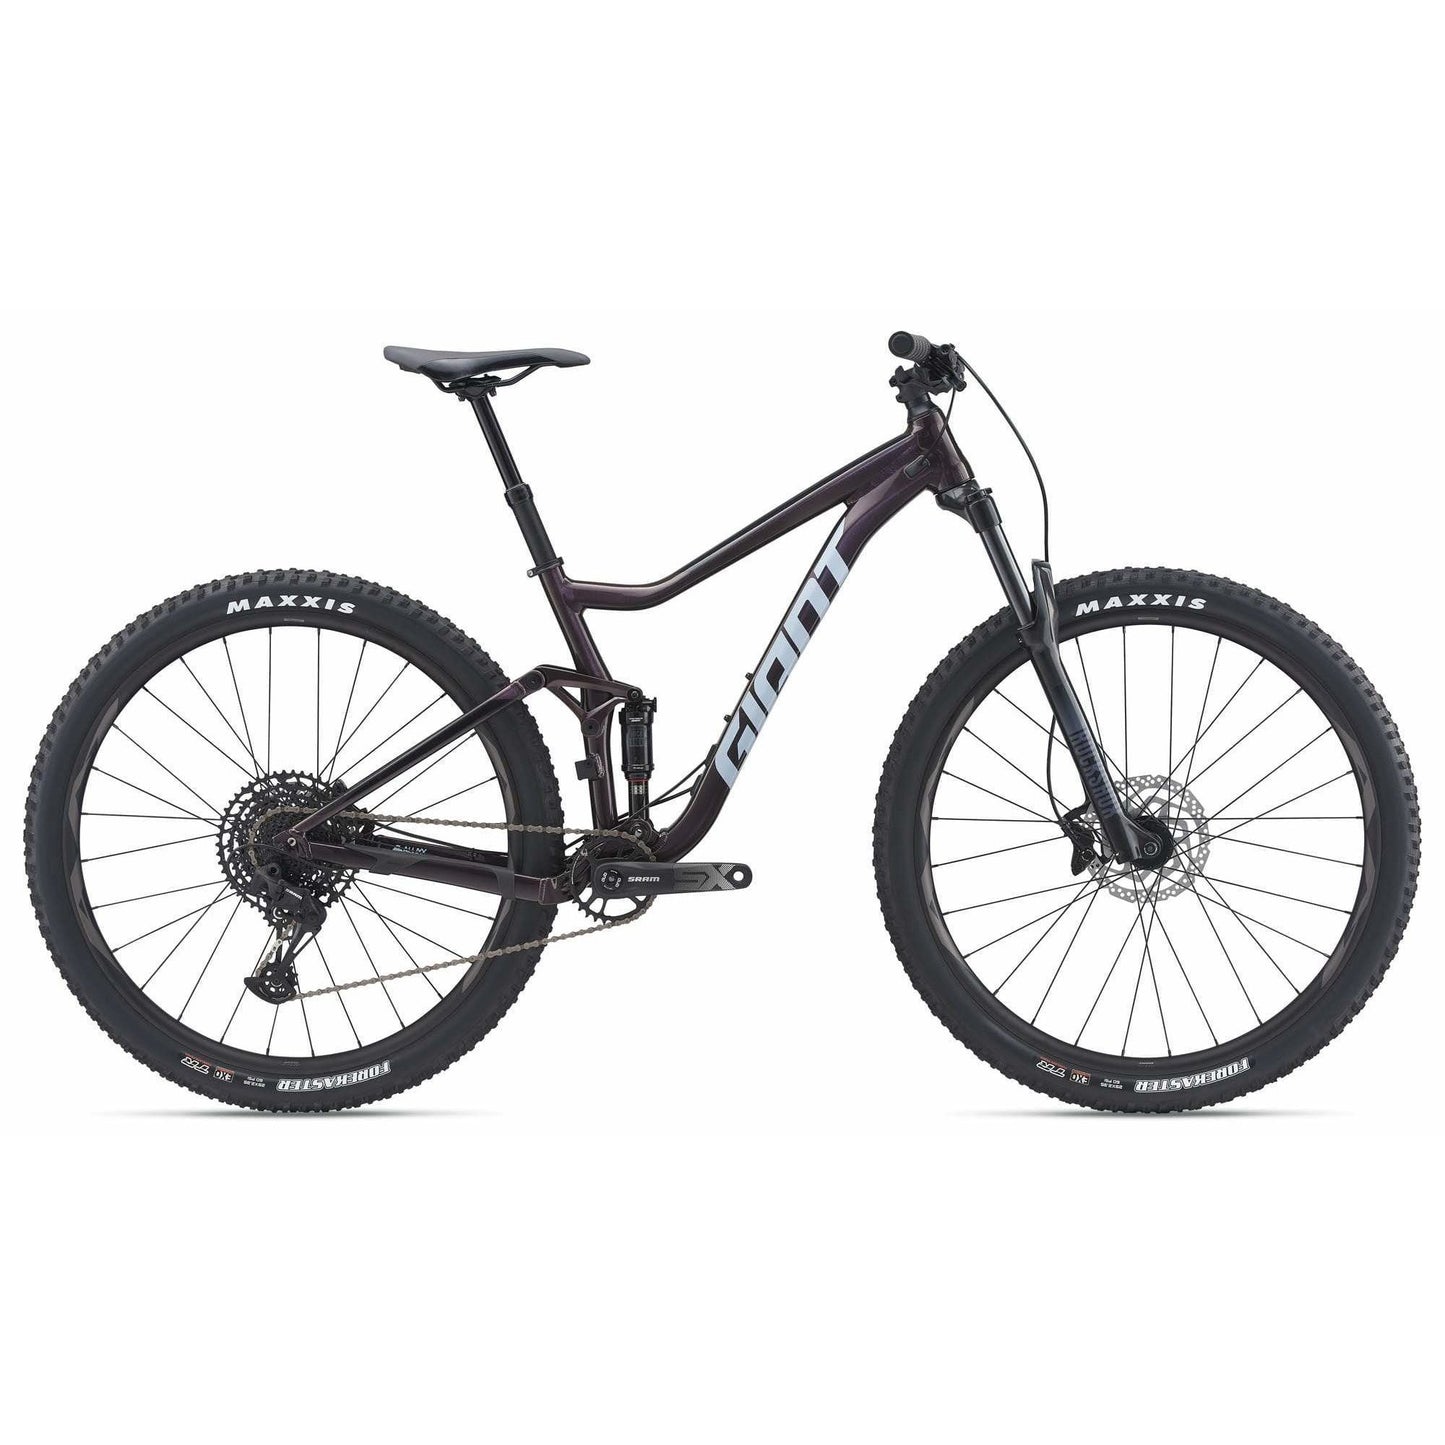 Giant Stance 1 - 29er Mountain Bike (2021)